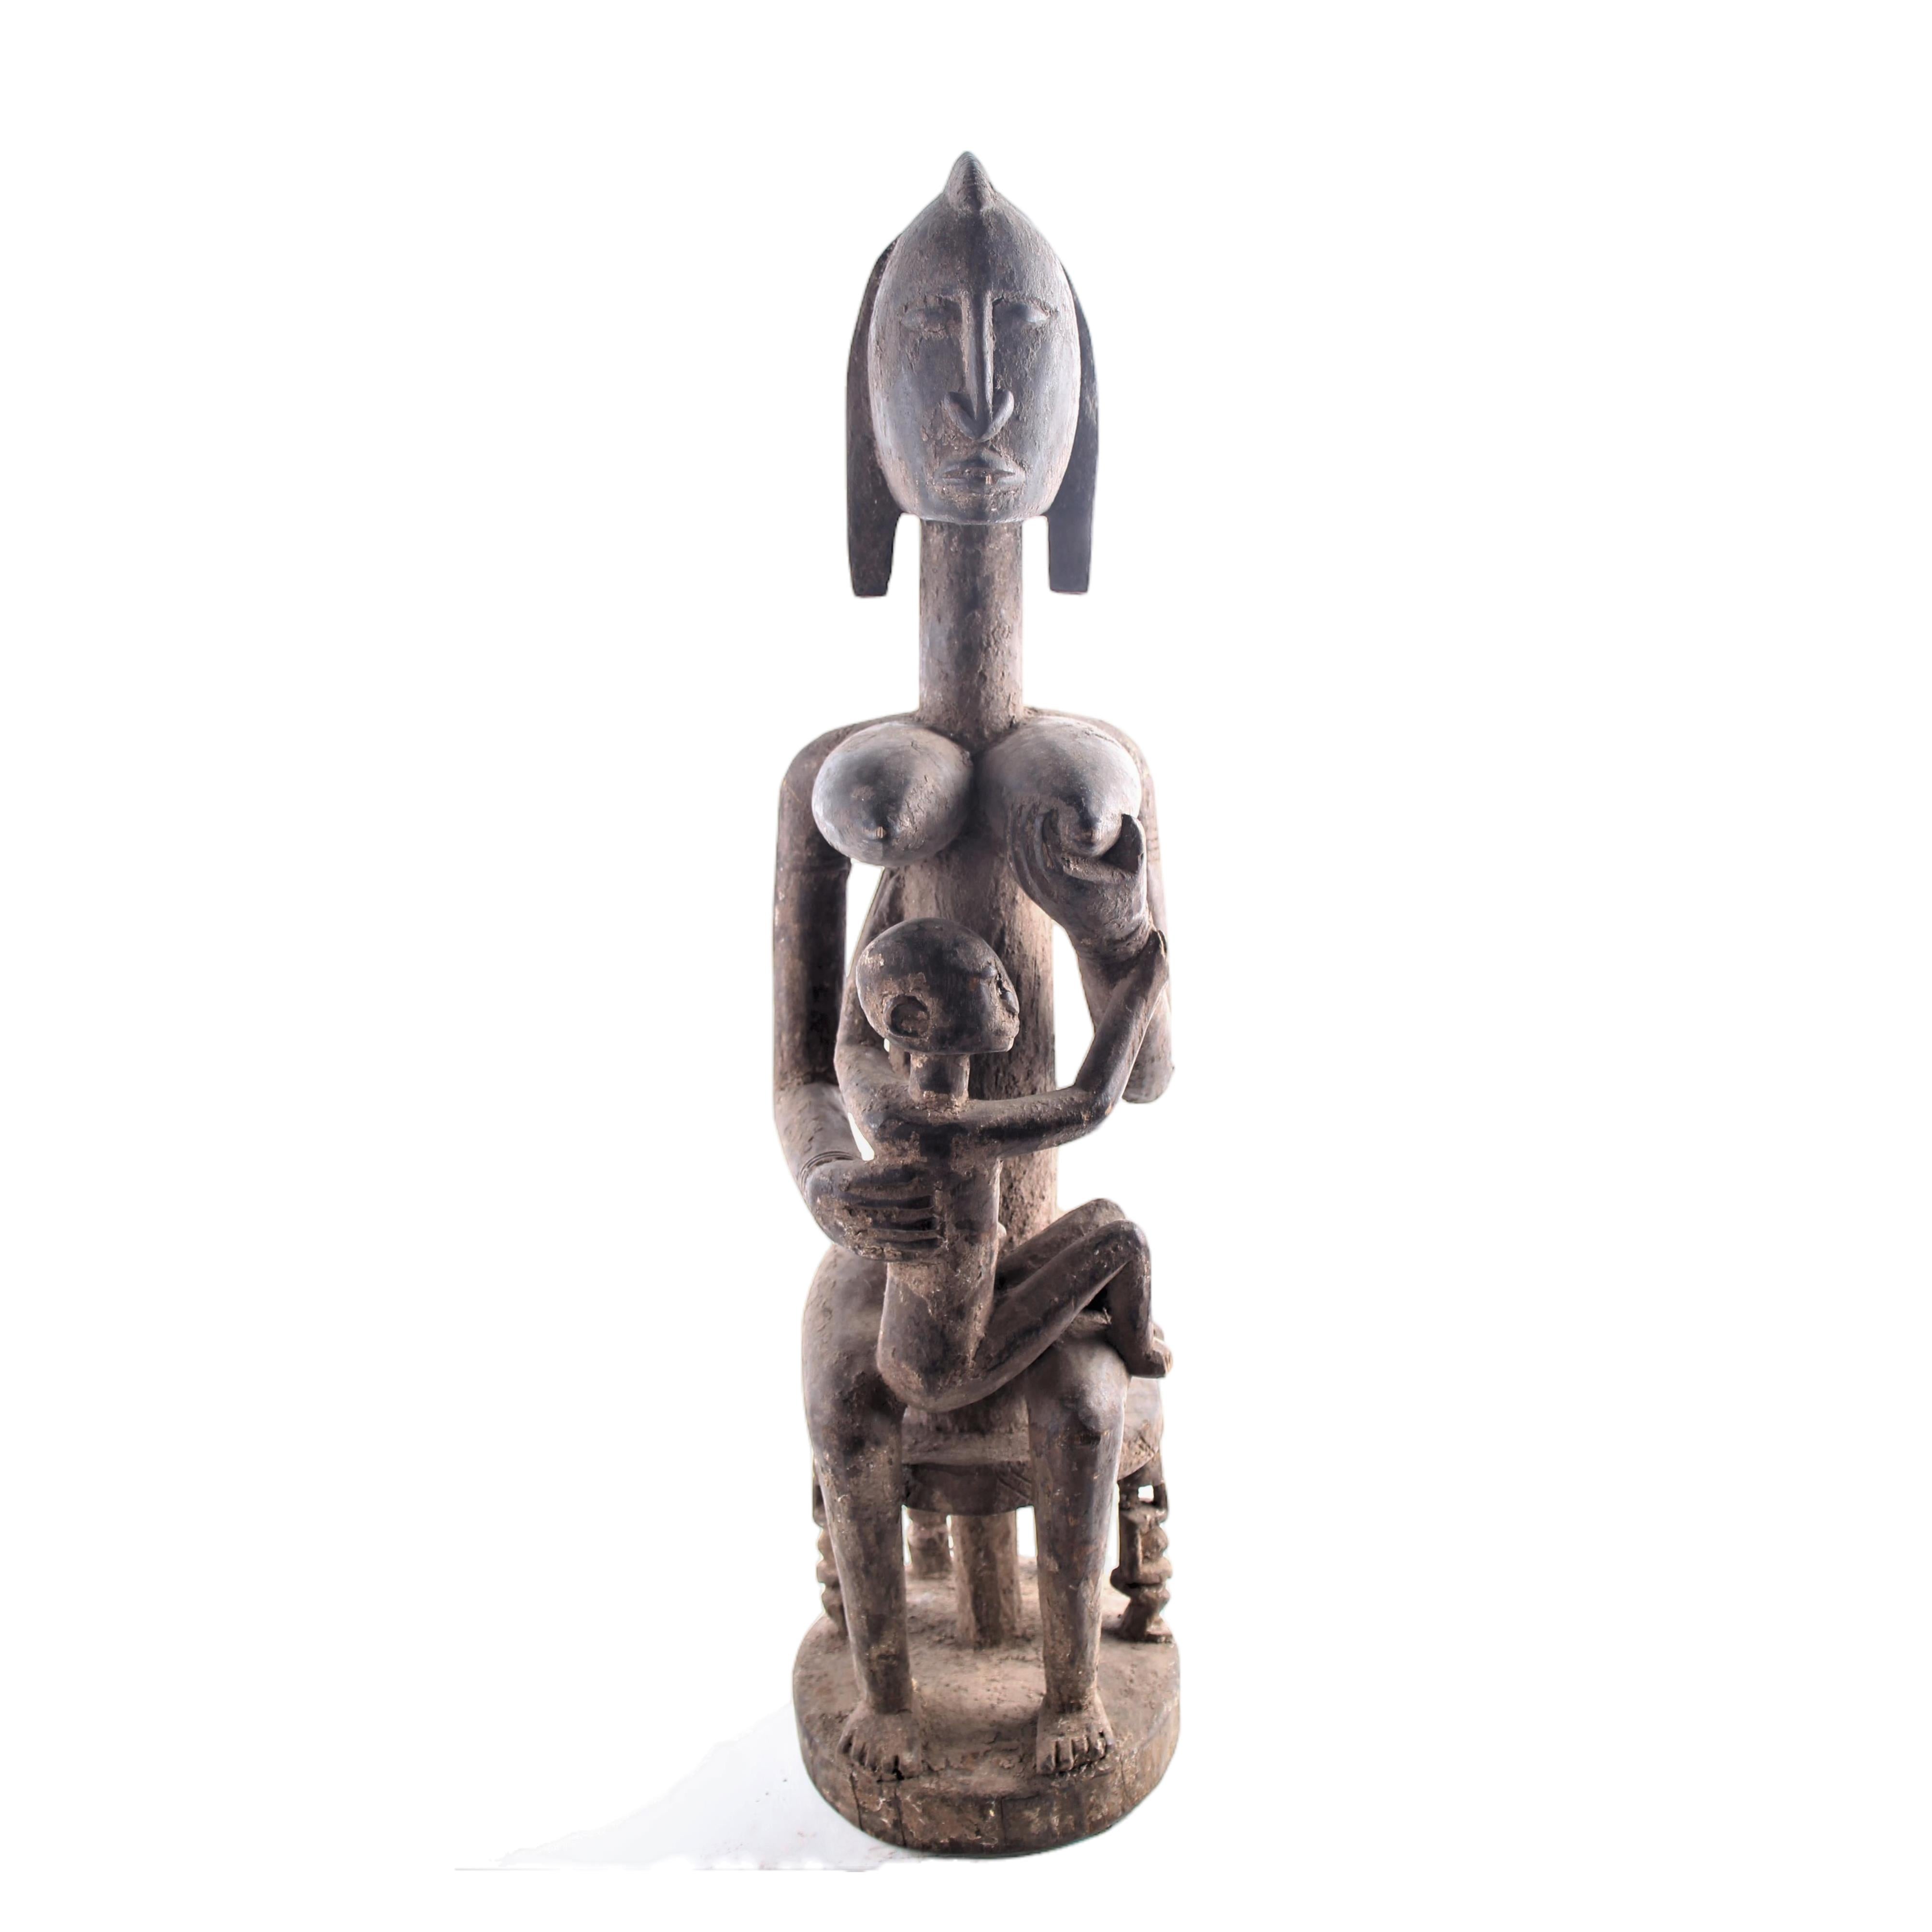 Dogon Tribe Figurine ~24.4" Tall - Figurine